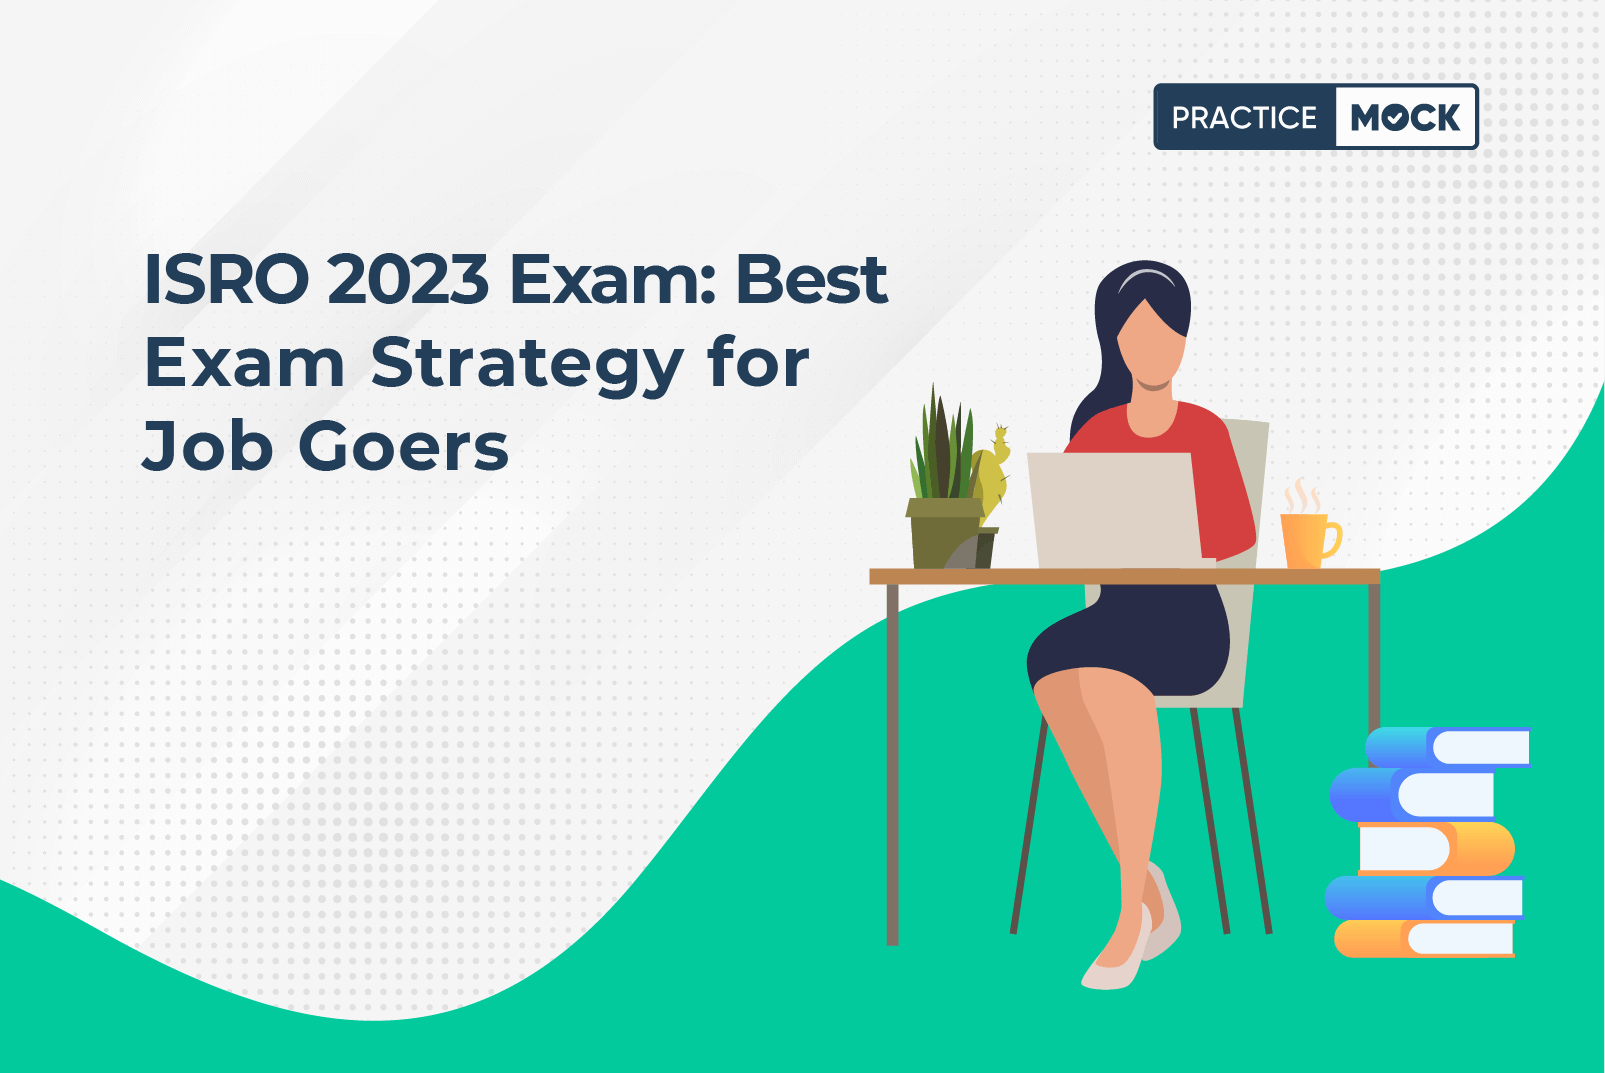 ISRO 2023 Exam: Best exam time strategy for Job Goers